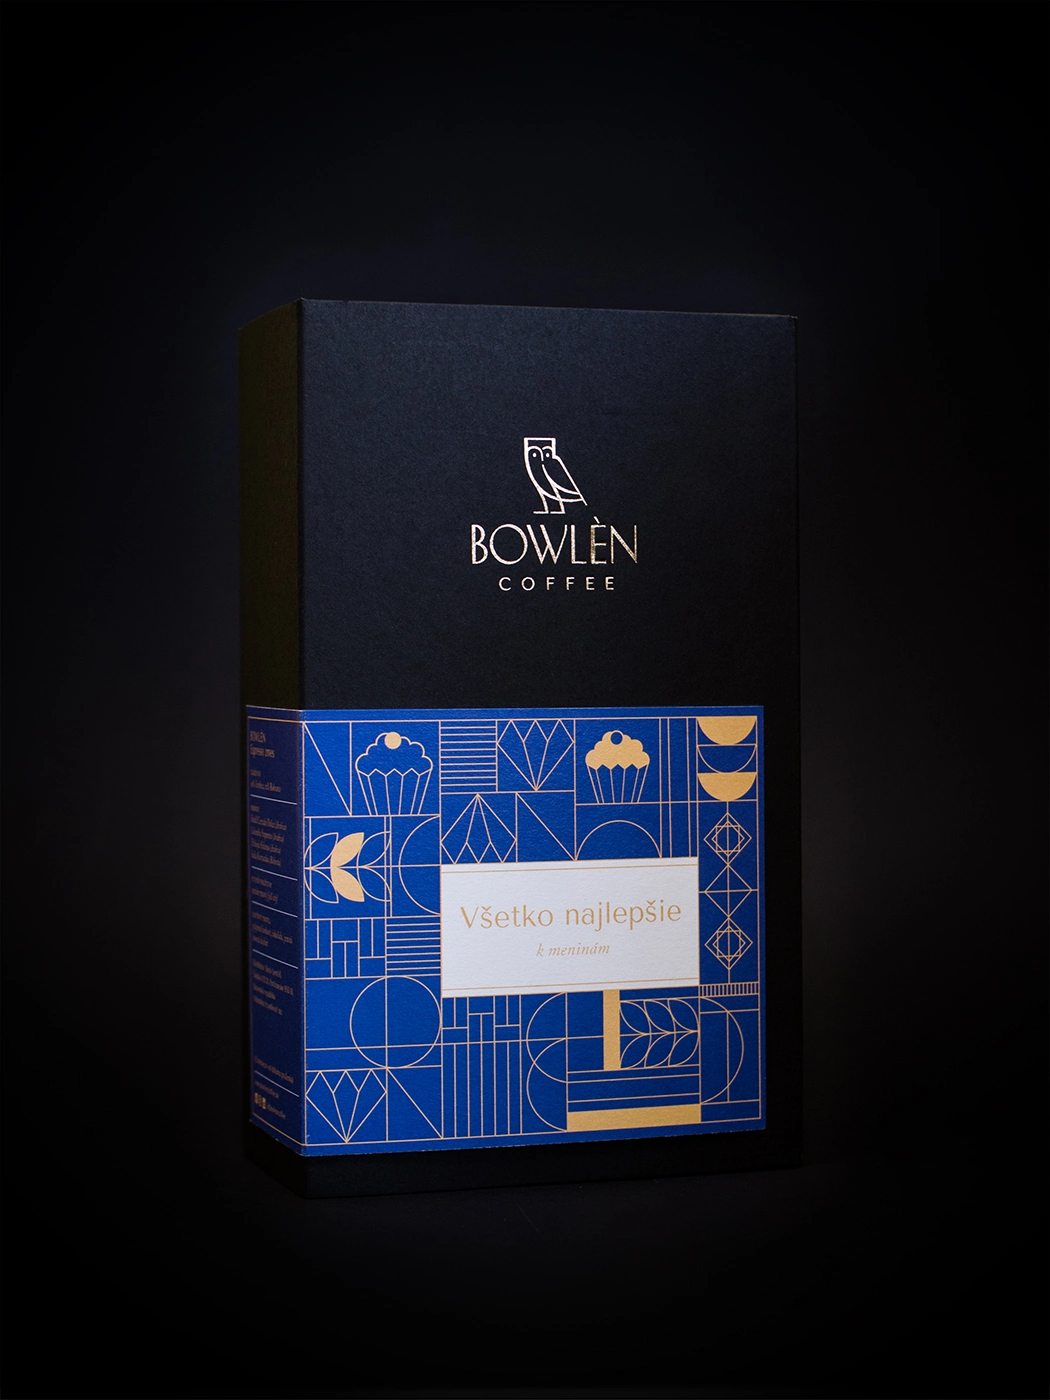 Bowlen Coffee